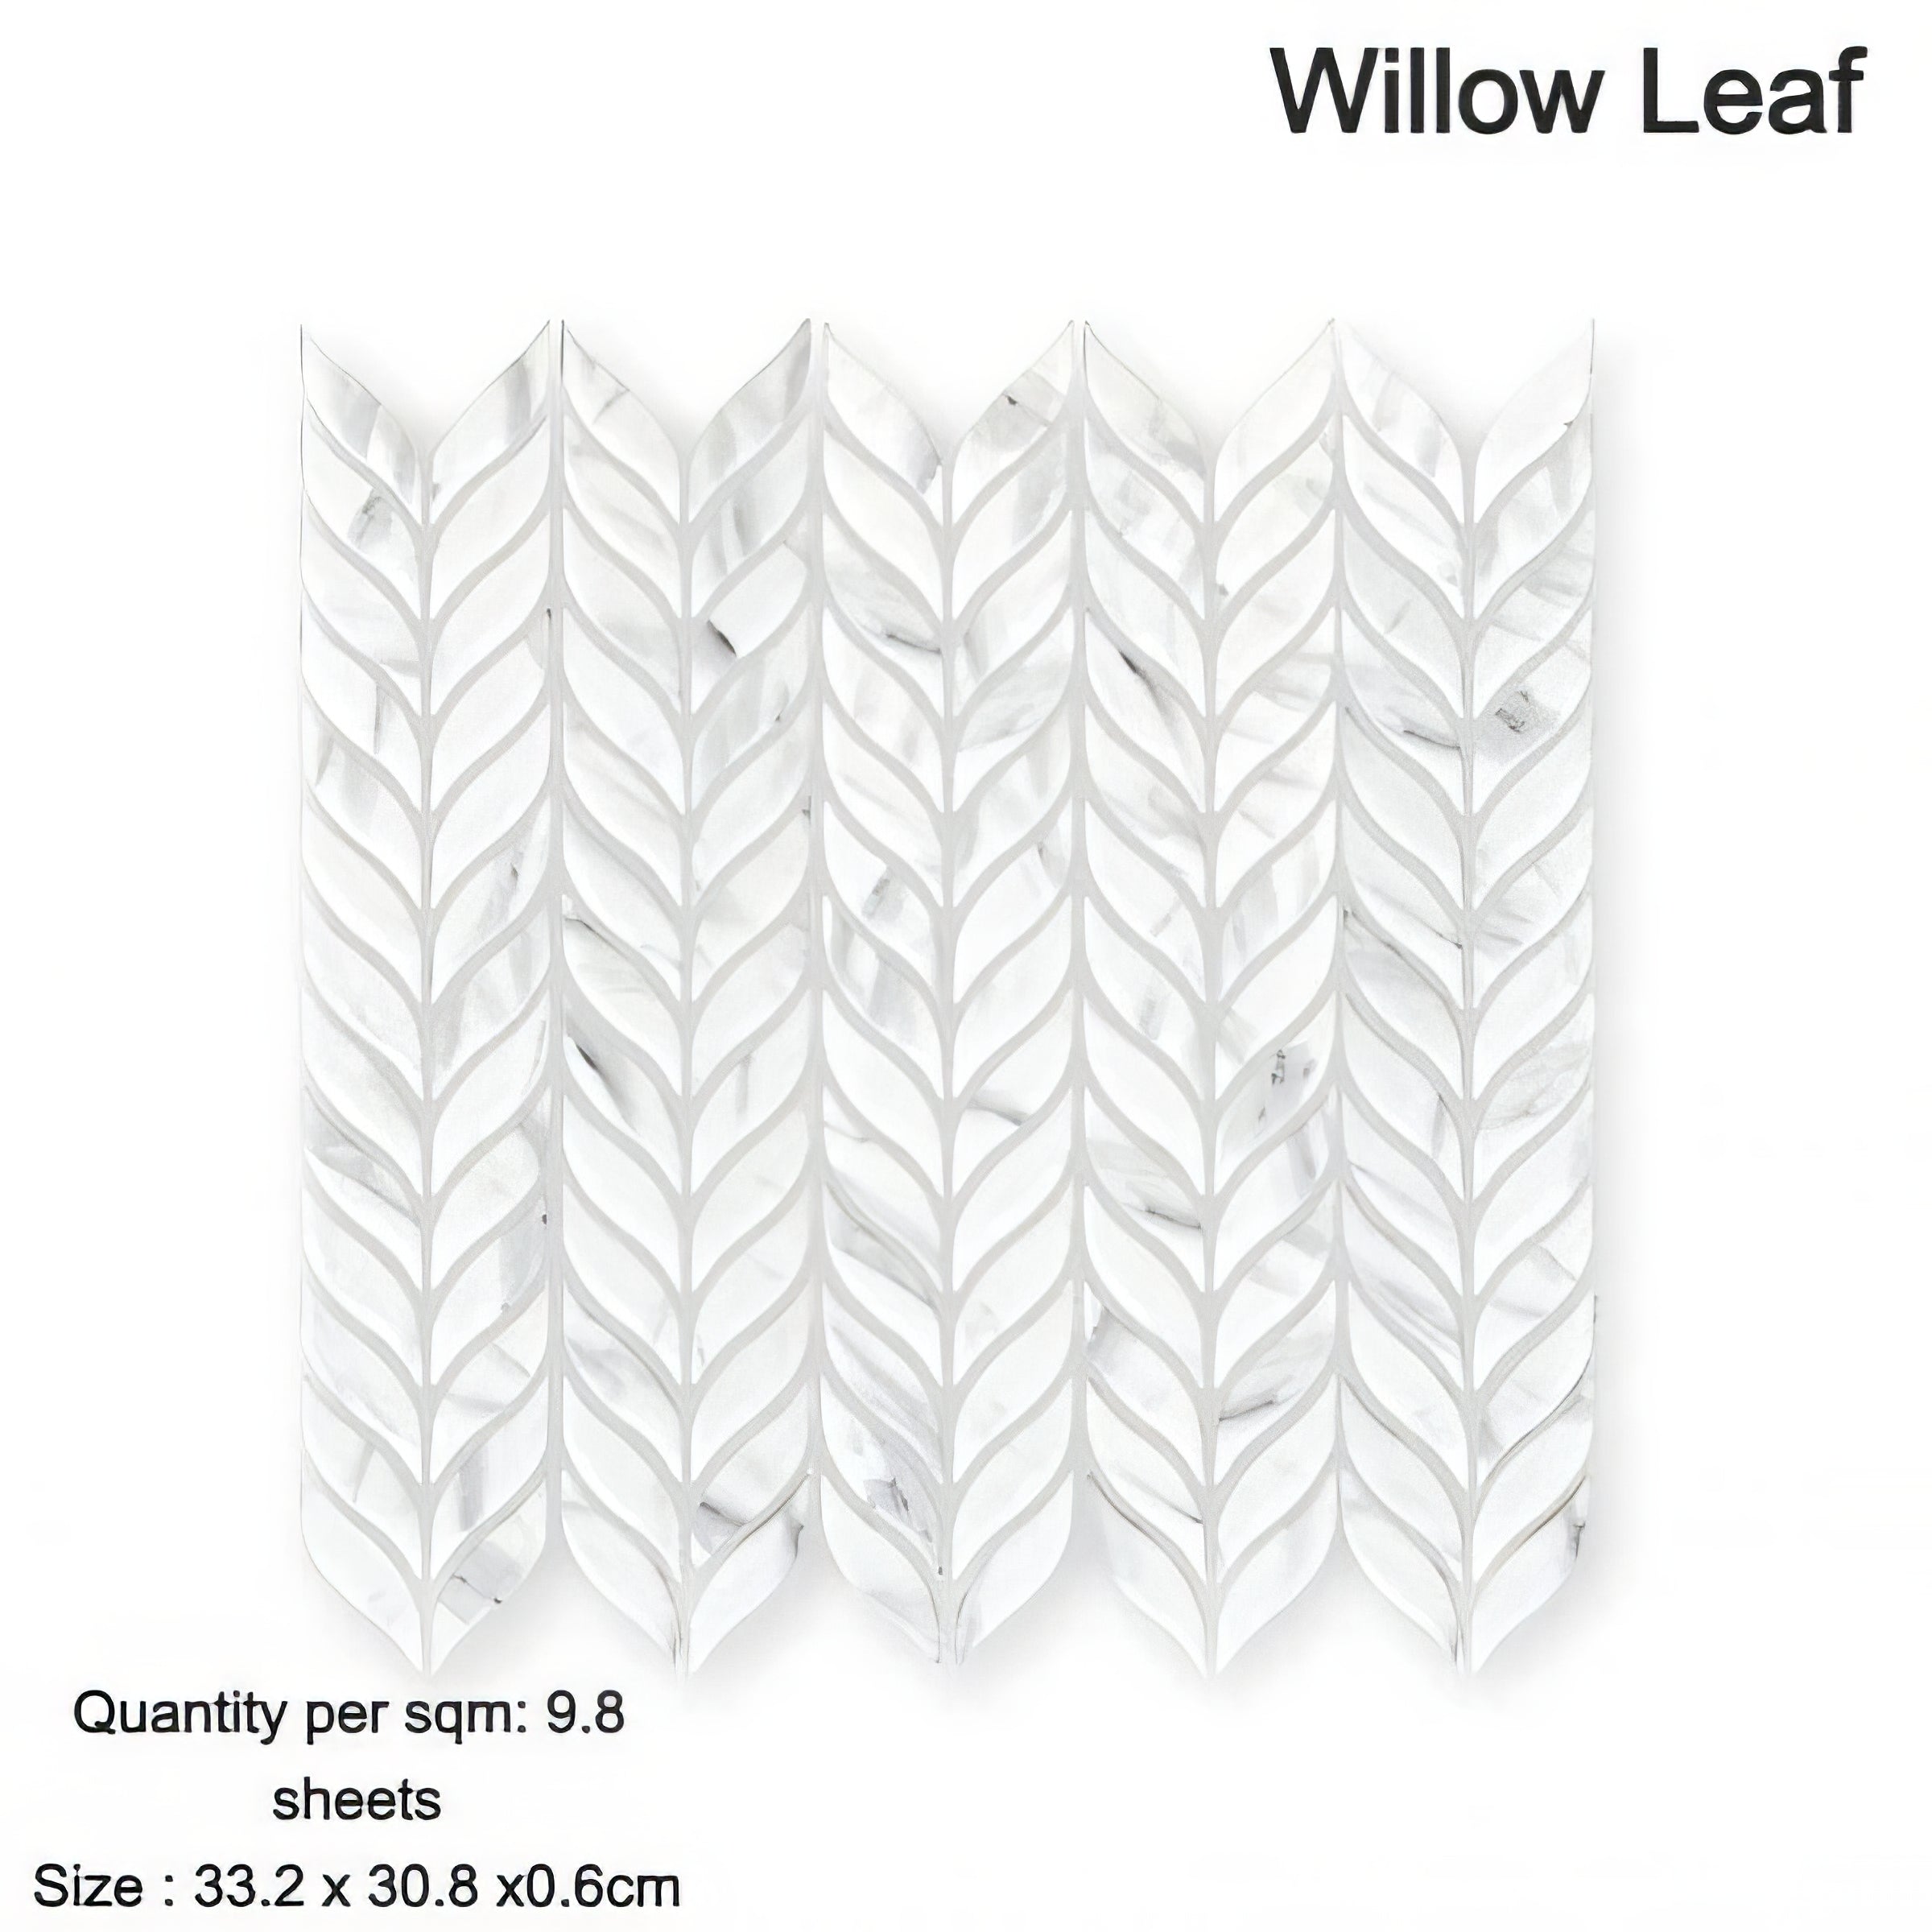 Aspen Willow leaf Mosaic